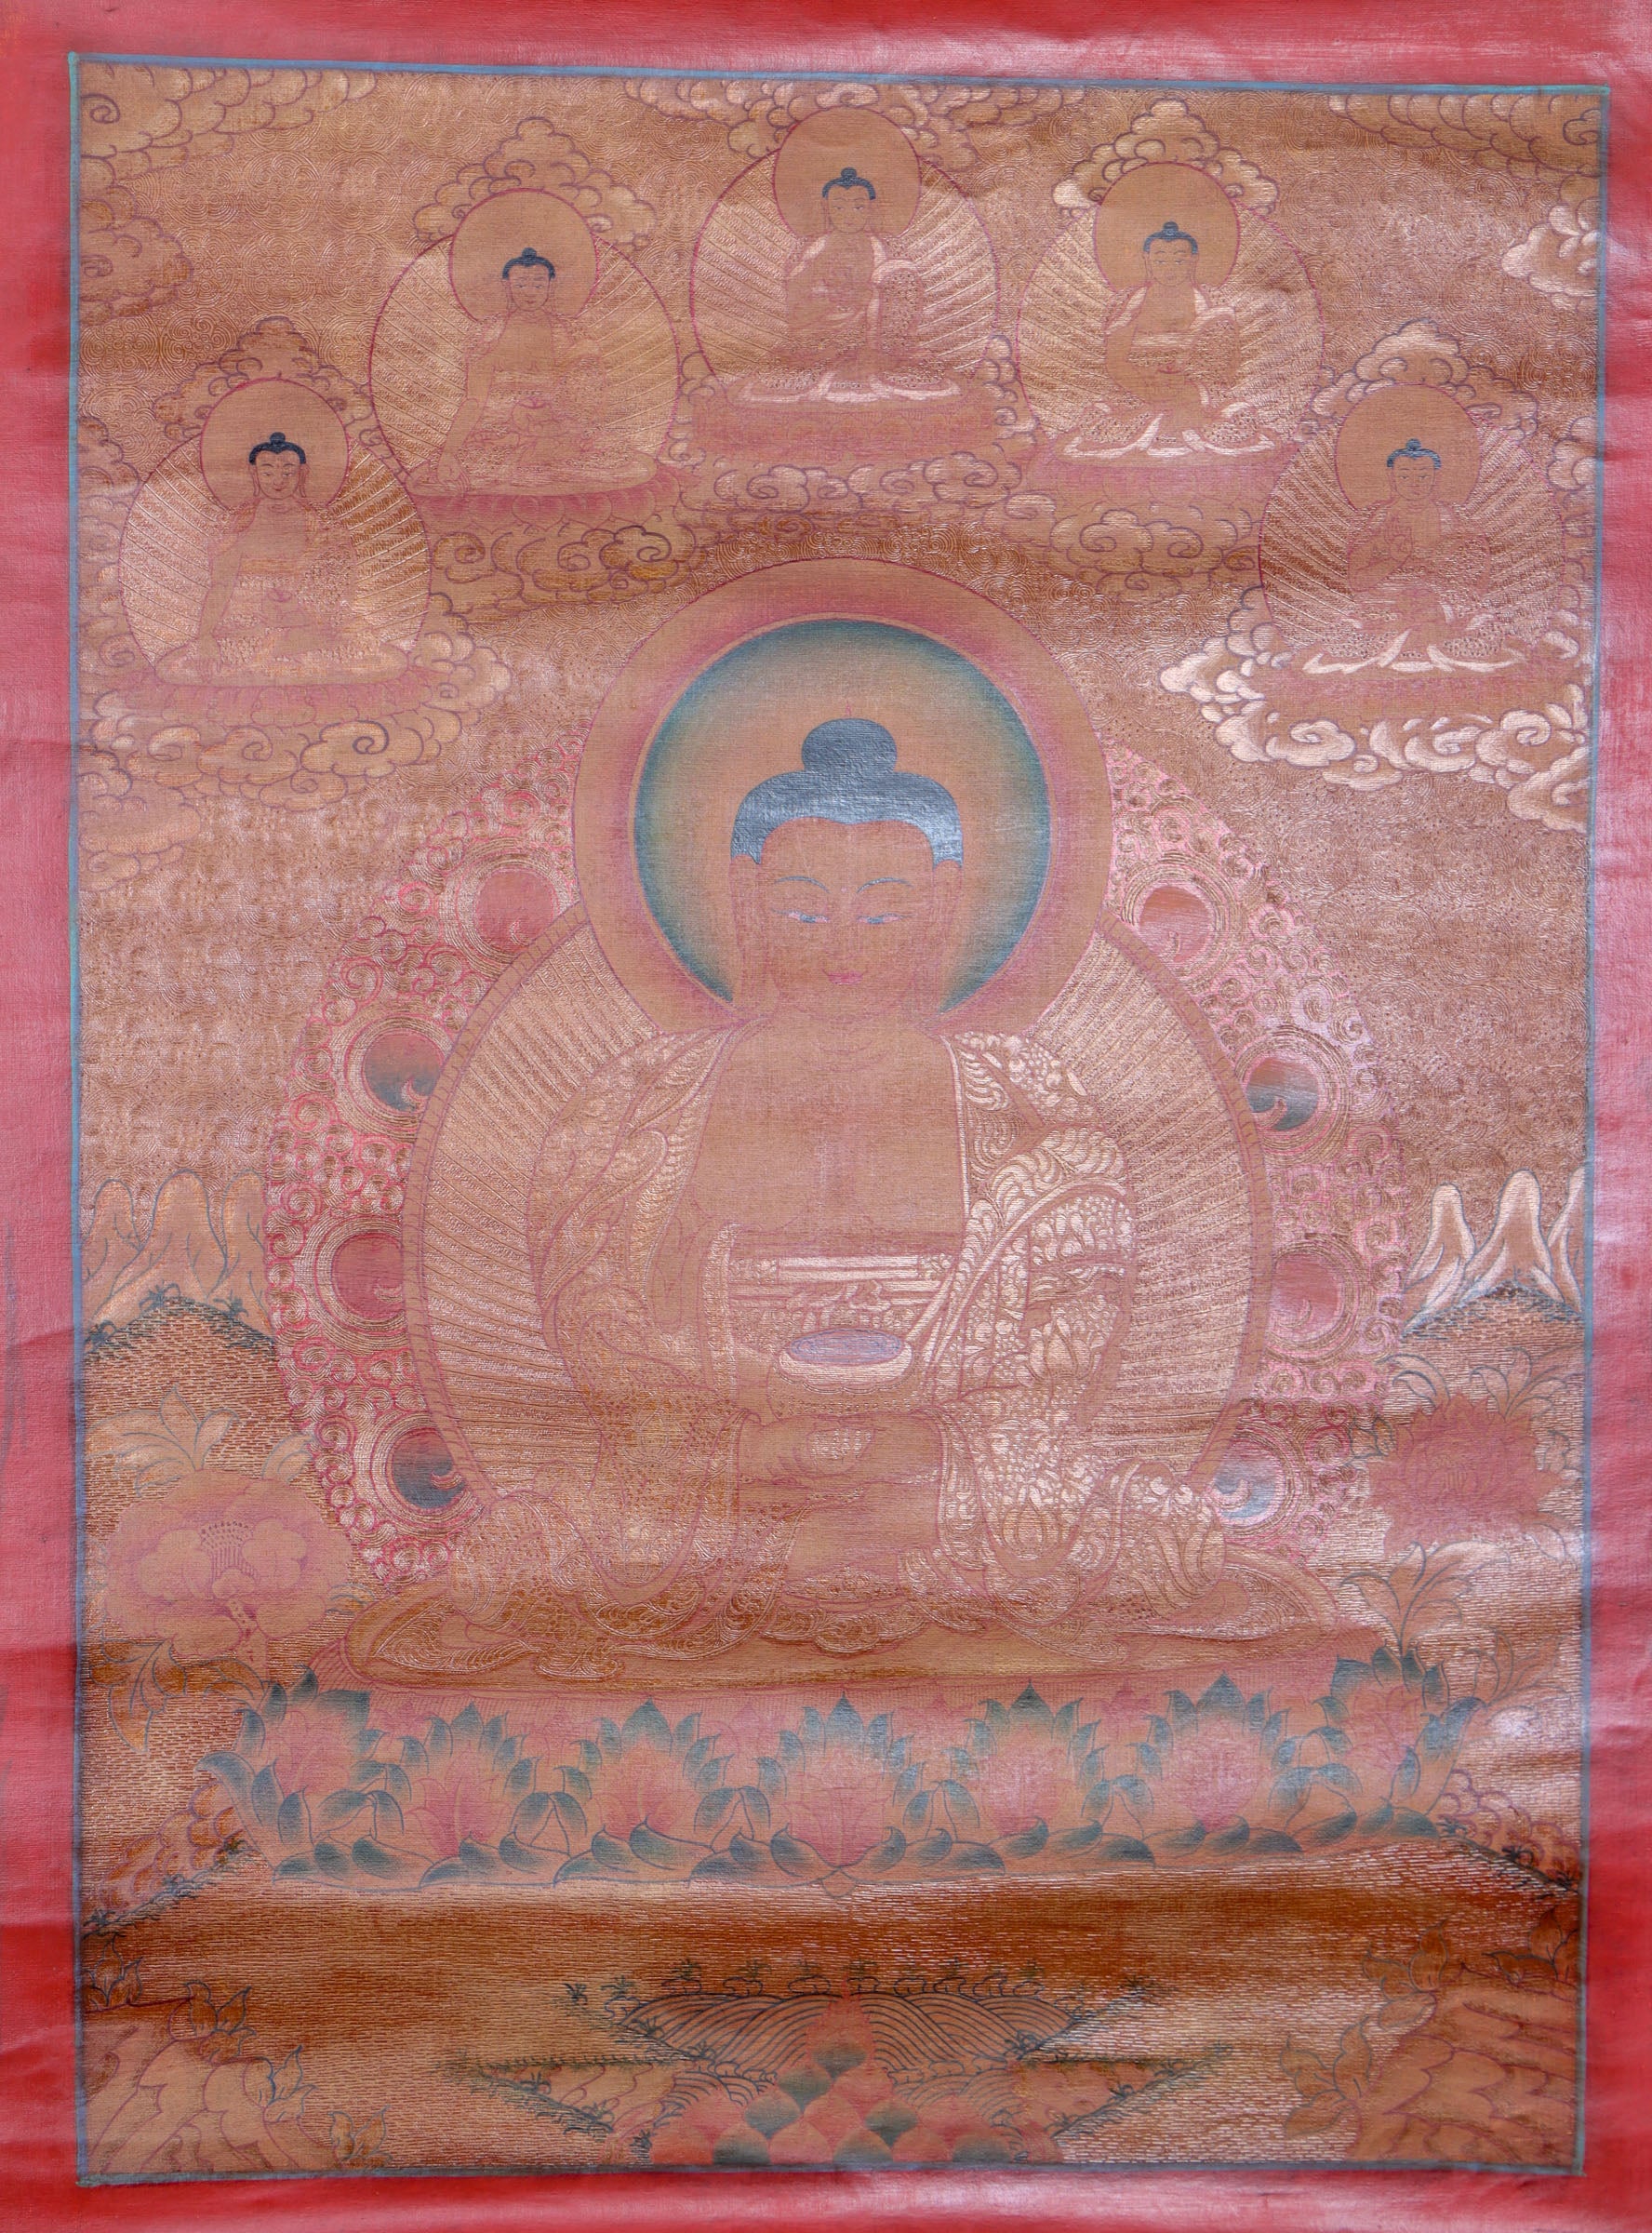 Amitabha Buddha Thangka Antique for enlightment.